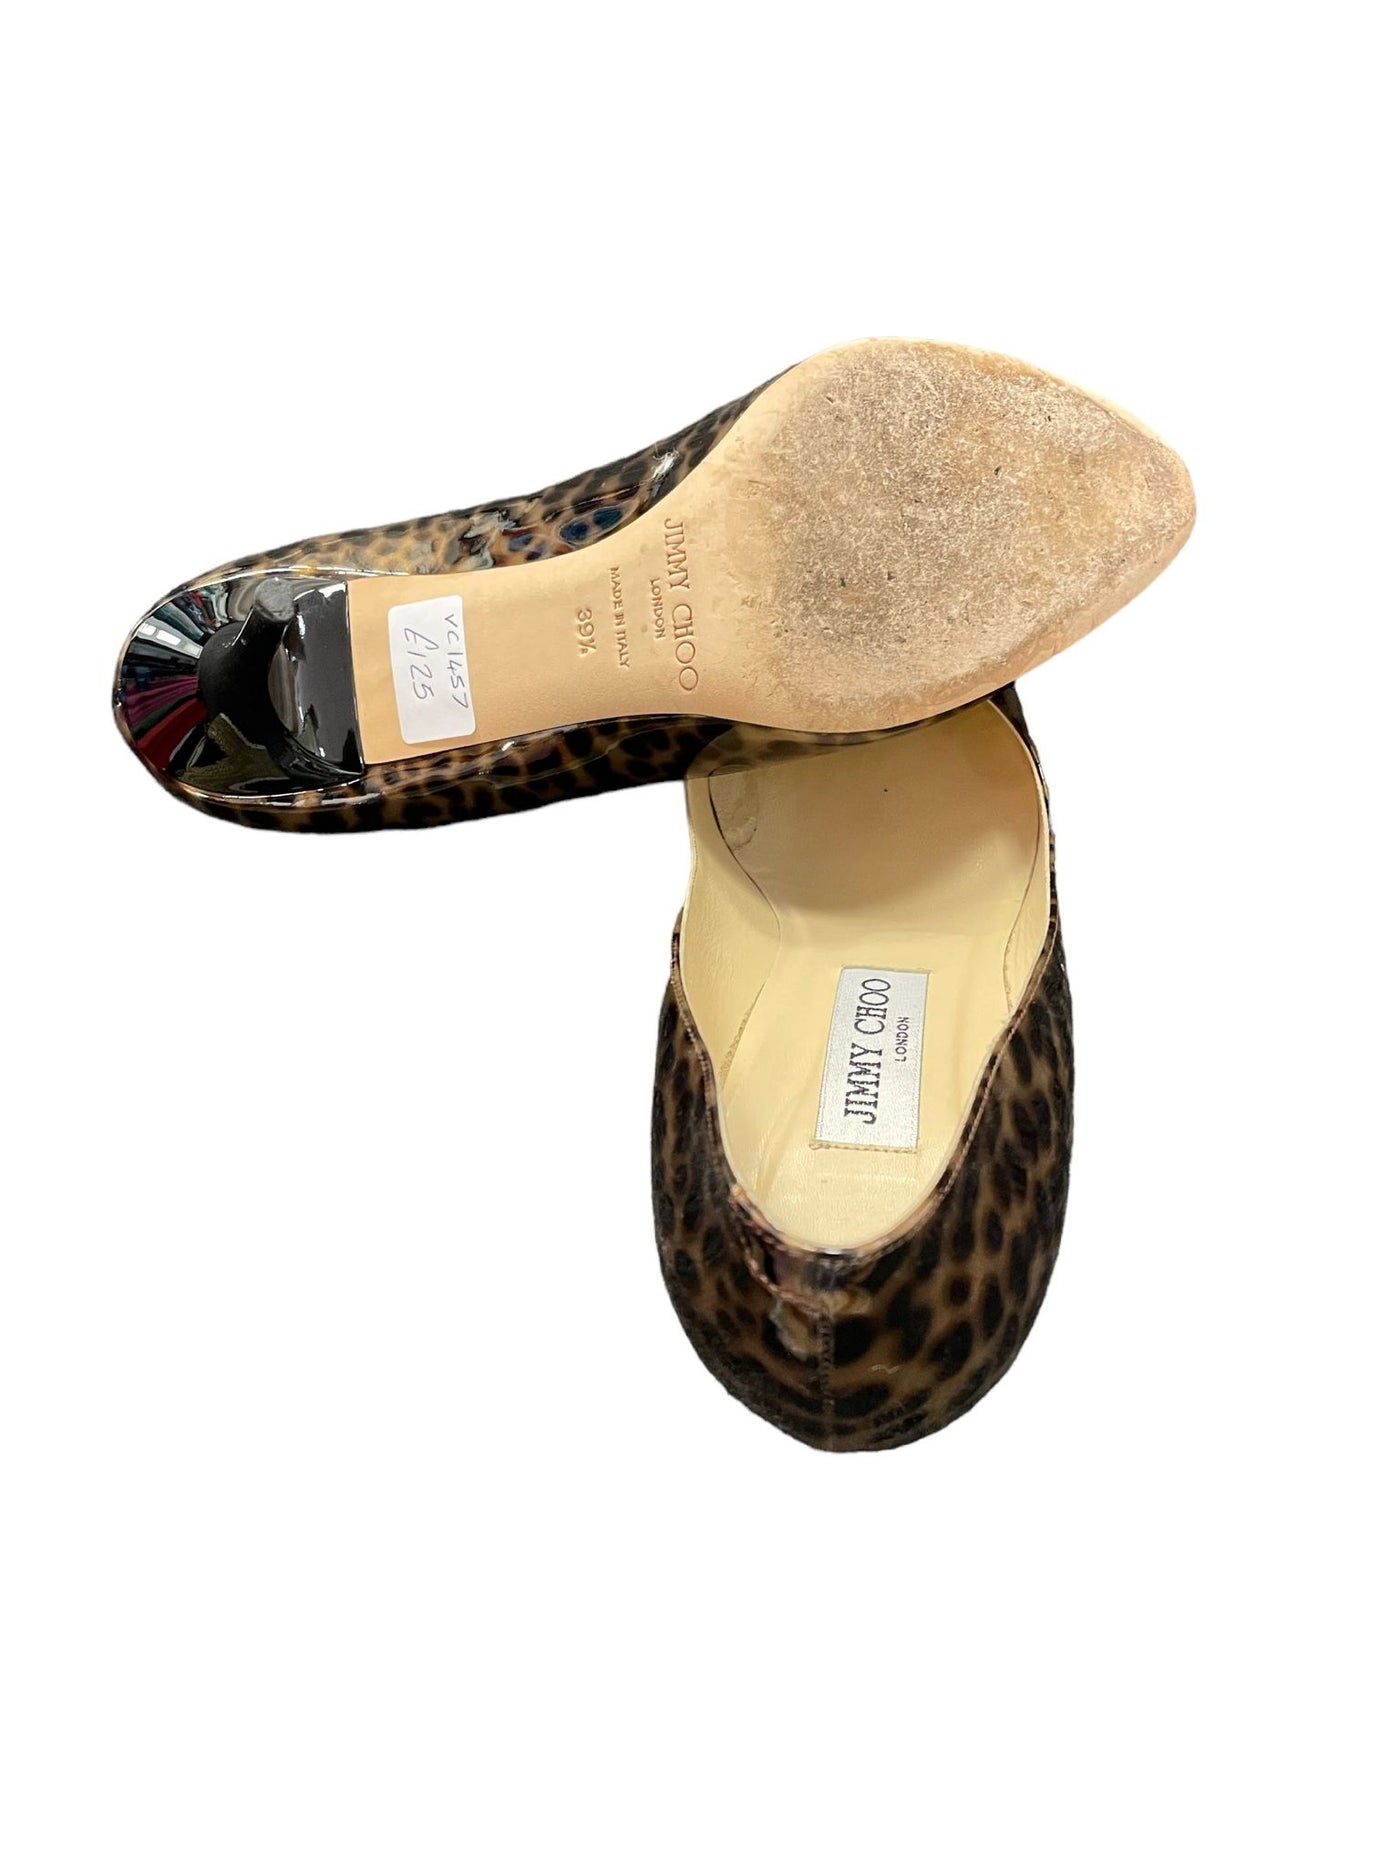 Jimmy Choo patent leather animal print heel size 39.5